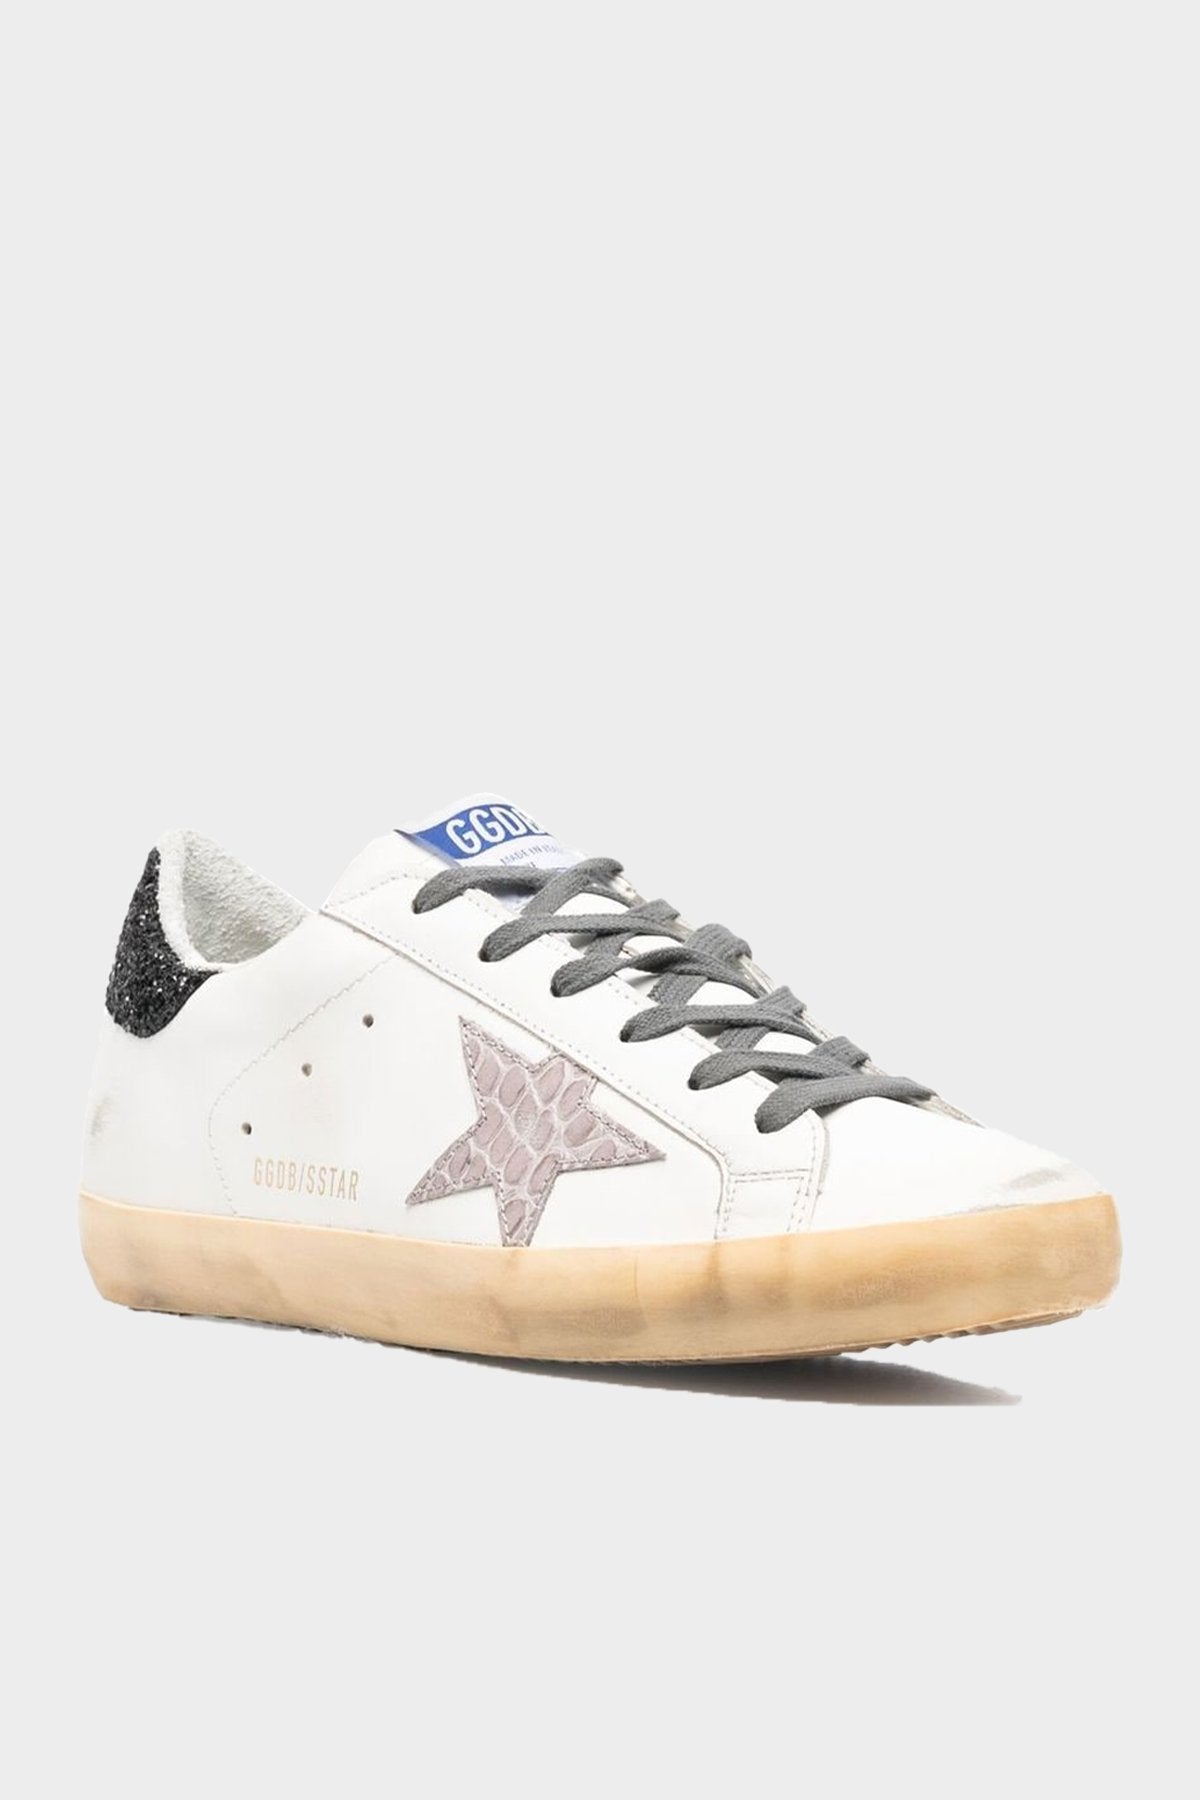 Super-Star Cocco Printed Star White Leather Sneaker - shop-olivia.com